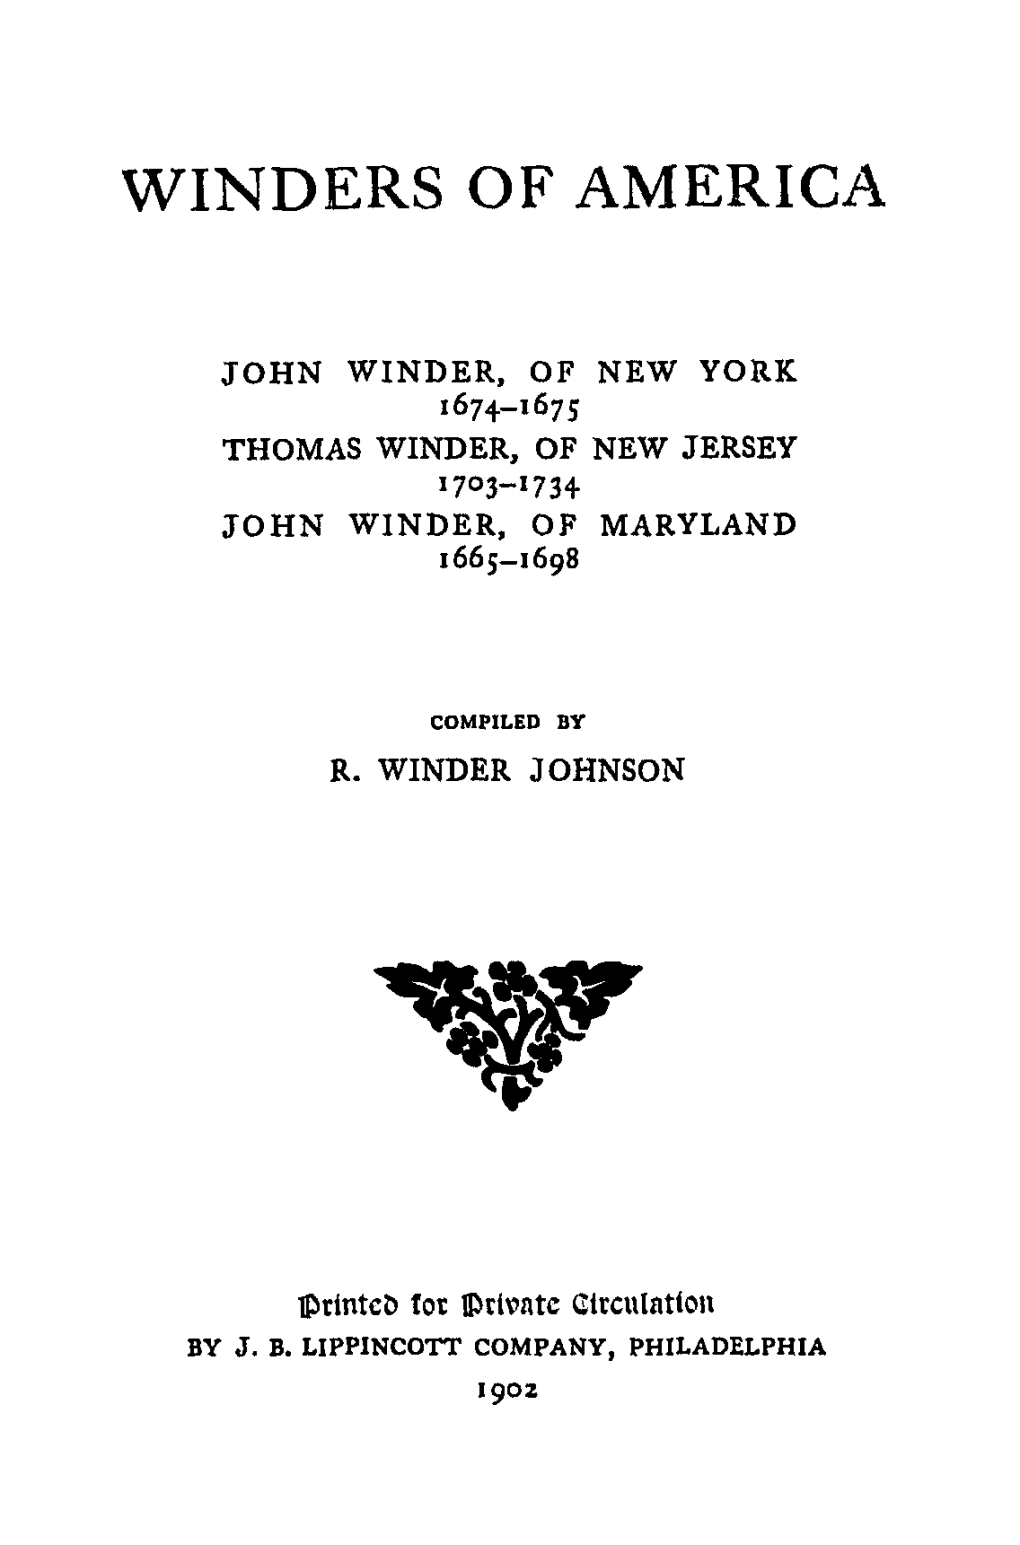 John Winder, of New York 1674-1675 Thomas Winder, of New Jersey 1 7°3-1 734 John Winder, of Maryland 1665-1698